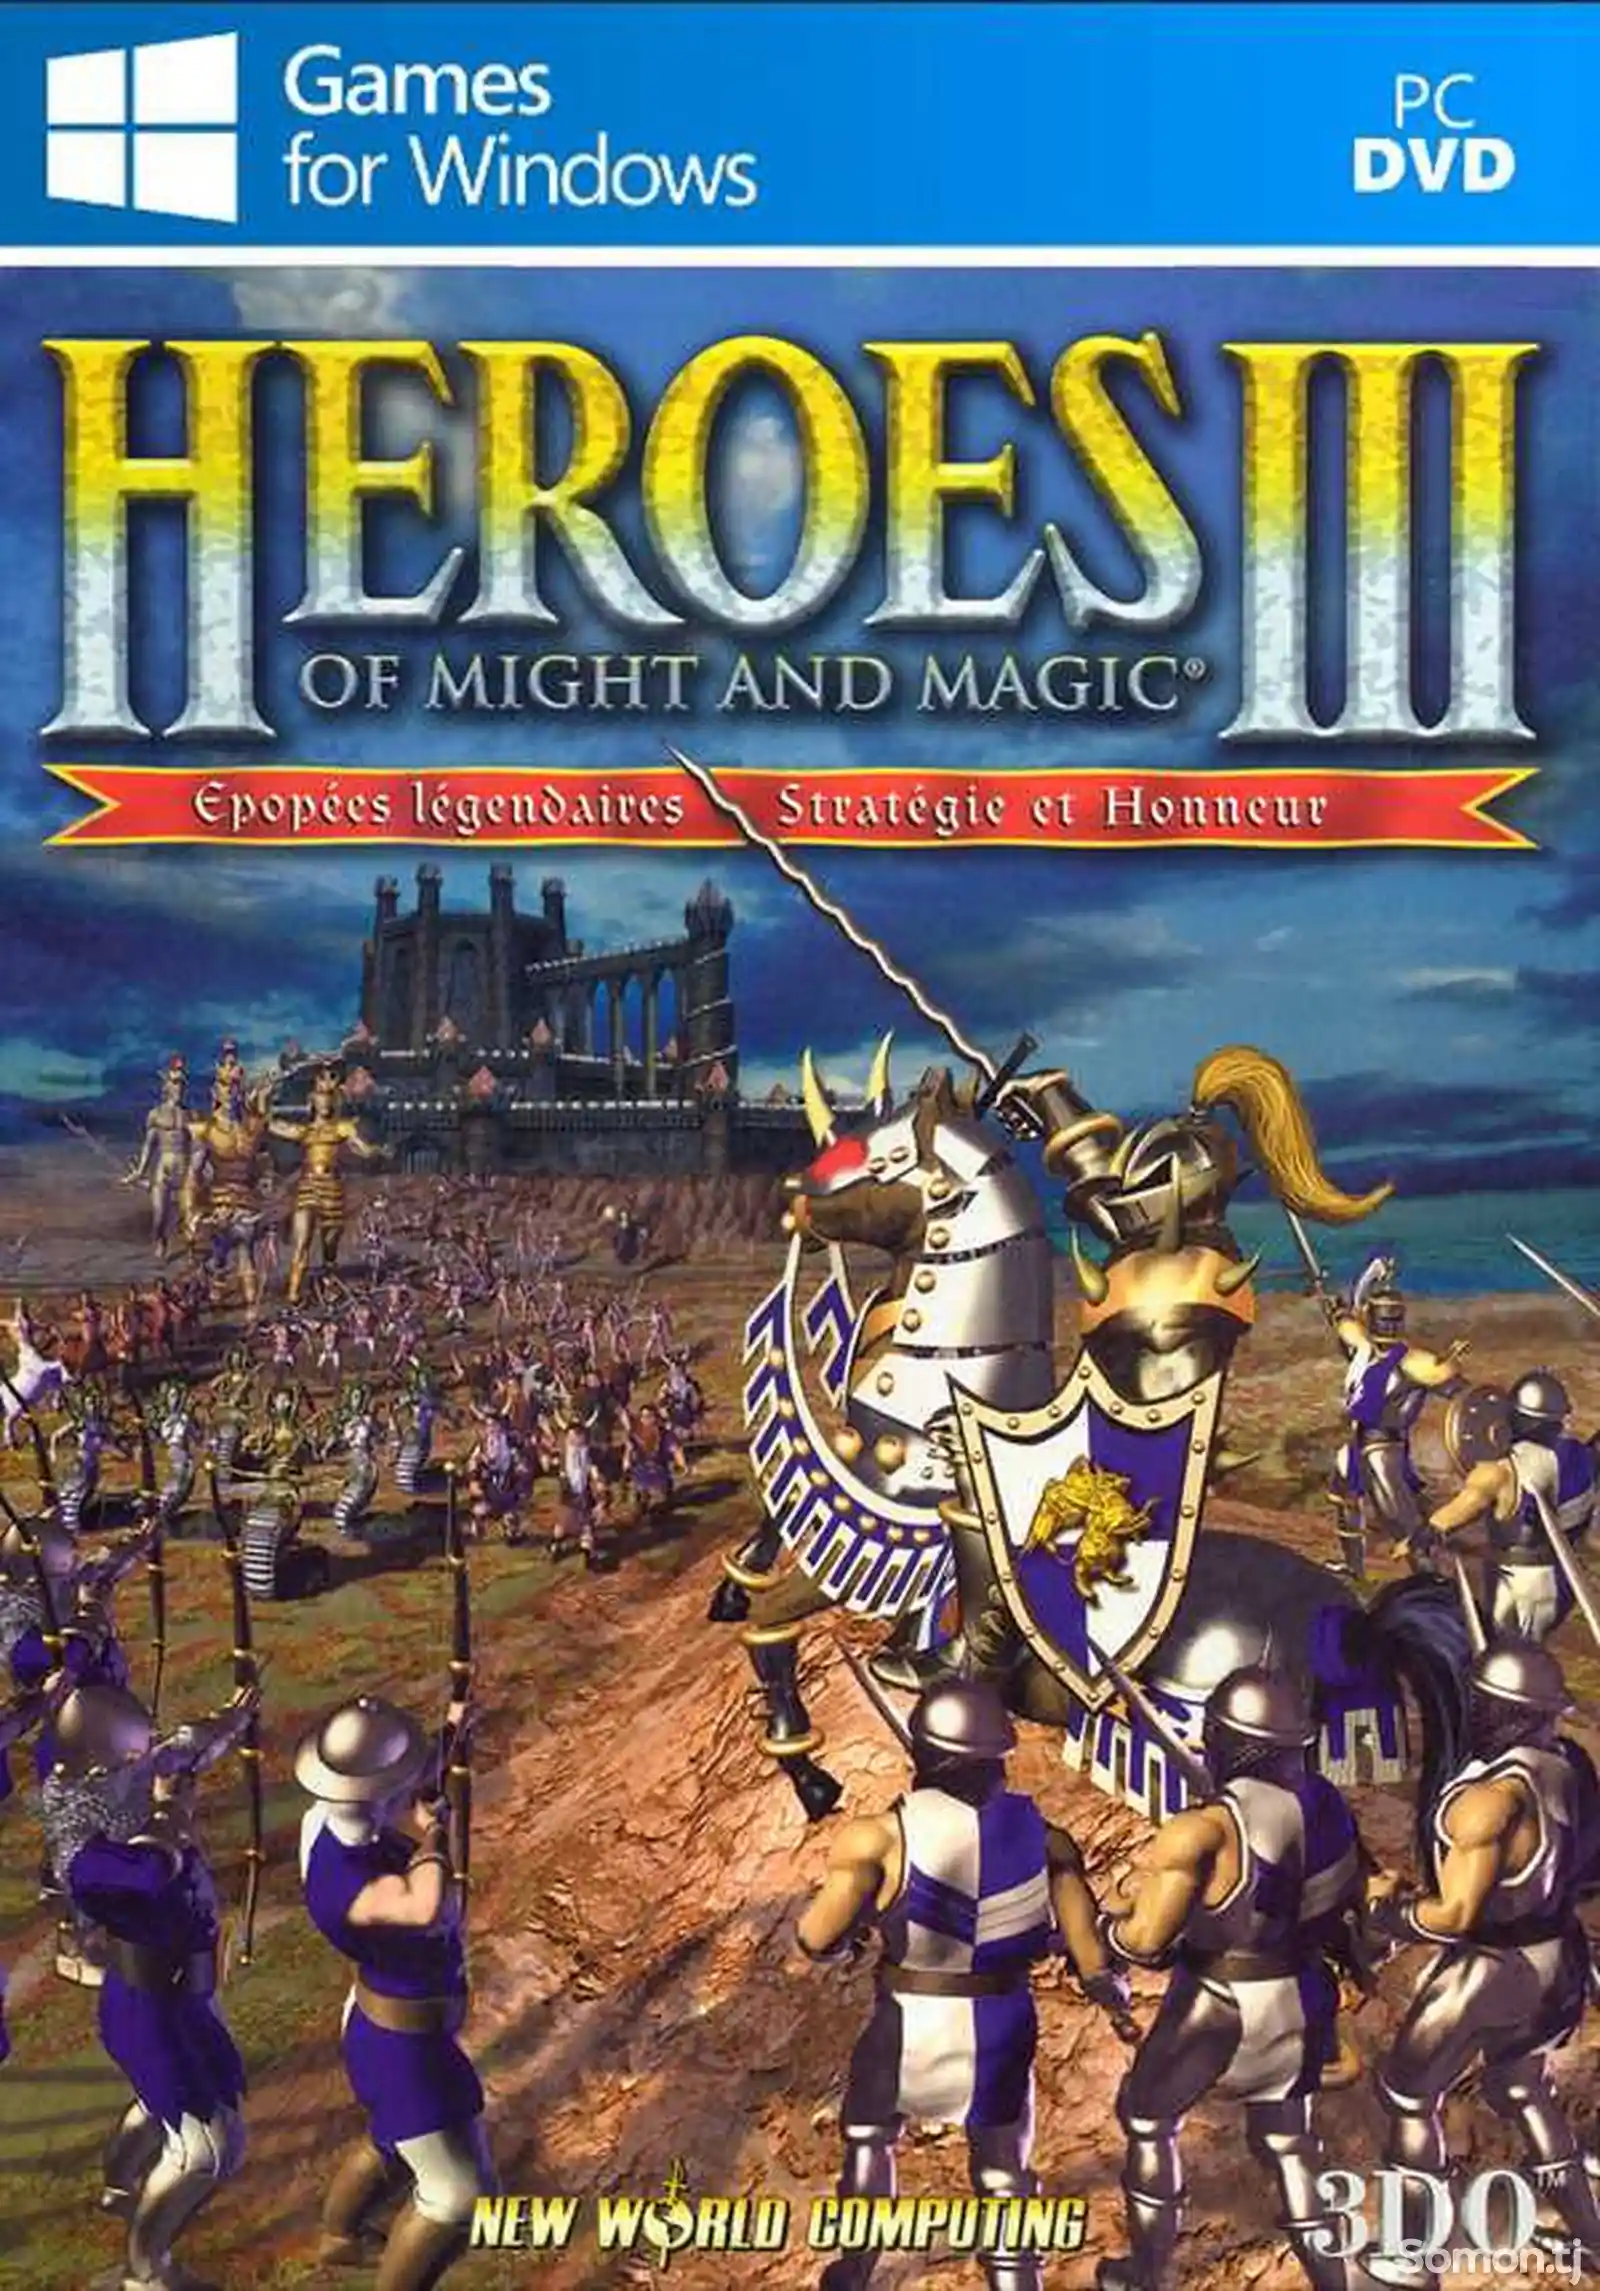 Игра Heroes of might and magic 3 для компьютера-пк-pc-1